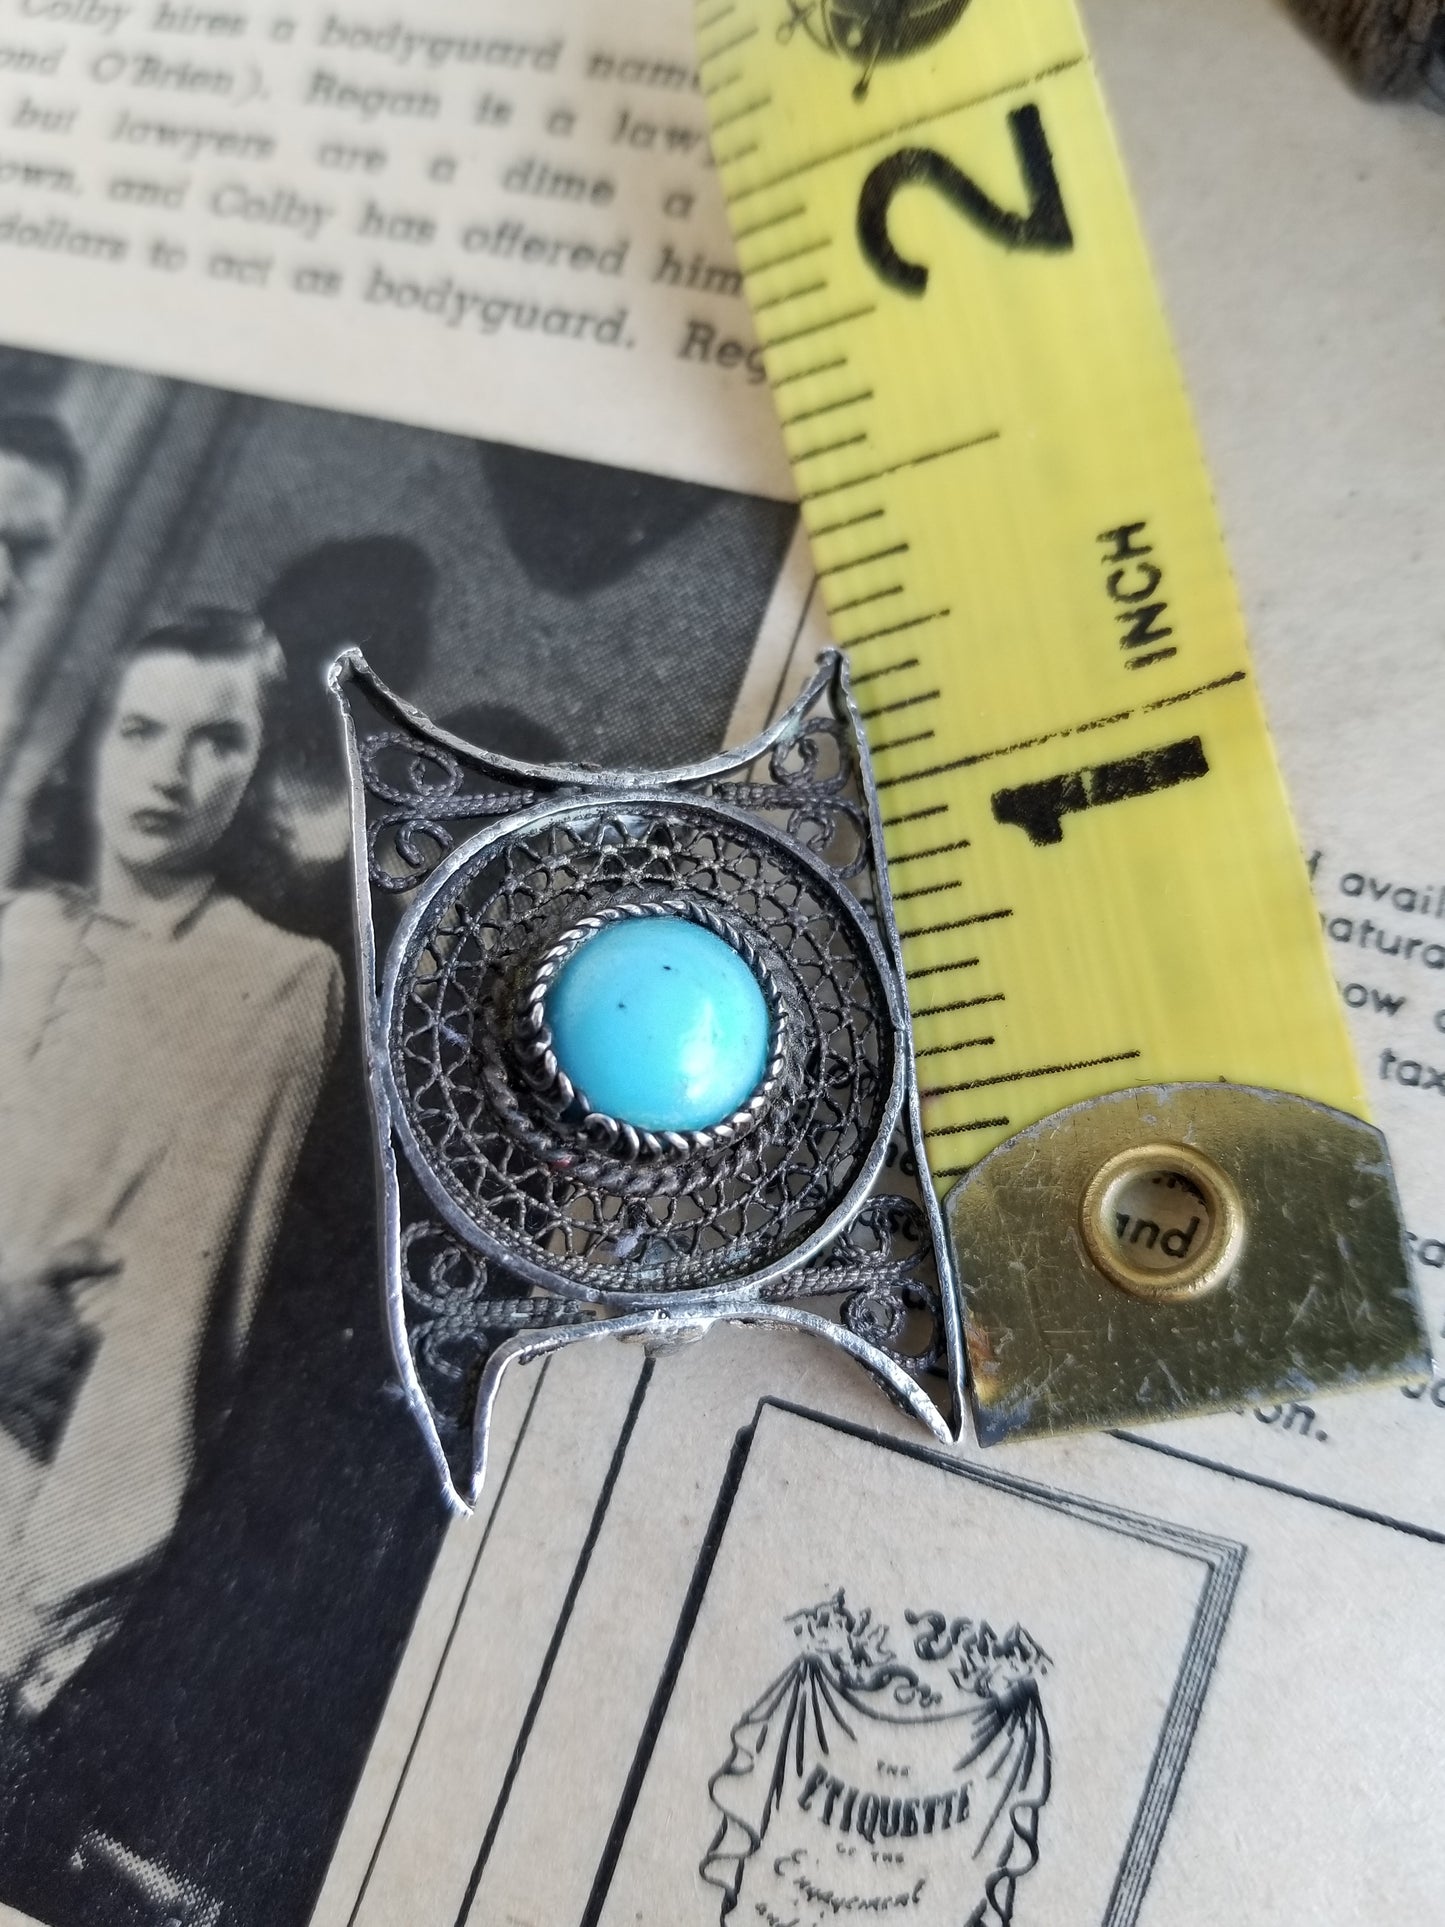 Victorian spun silver handmade turquoise antique brooch